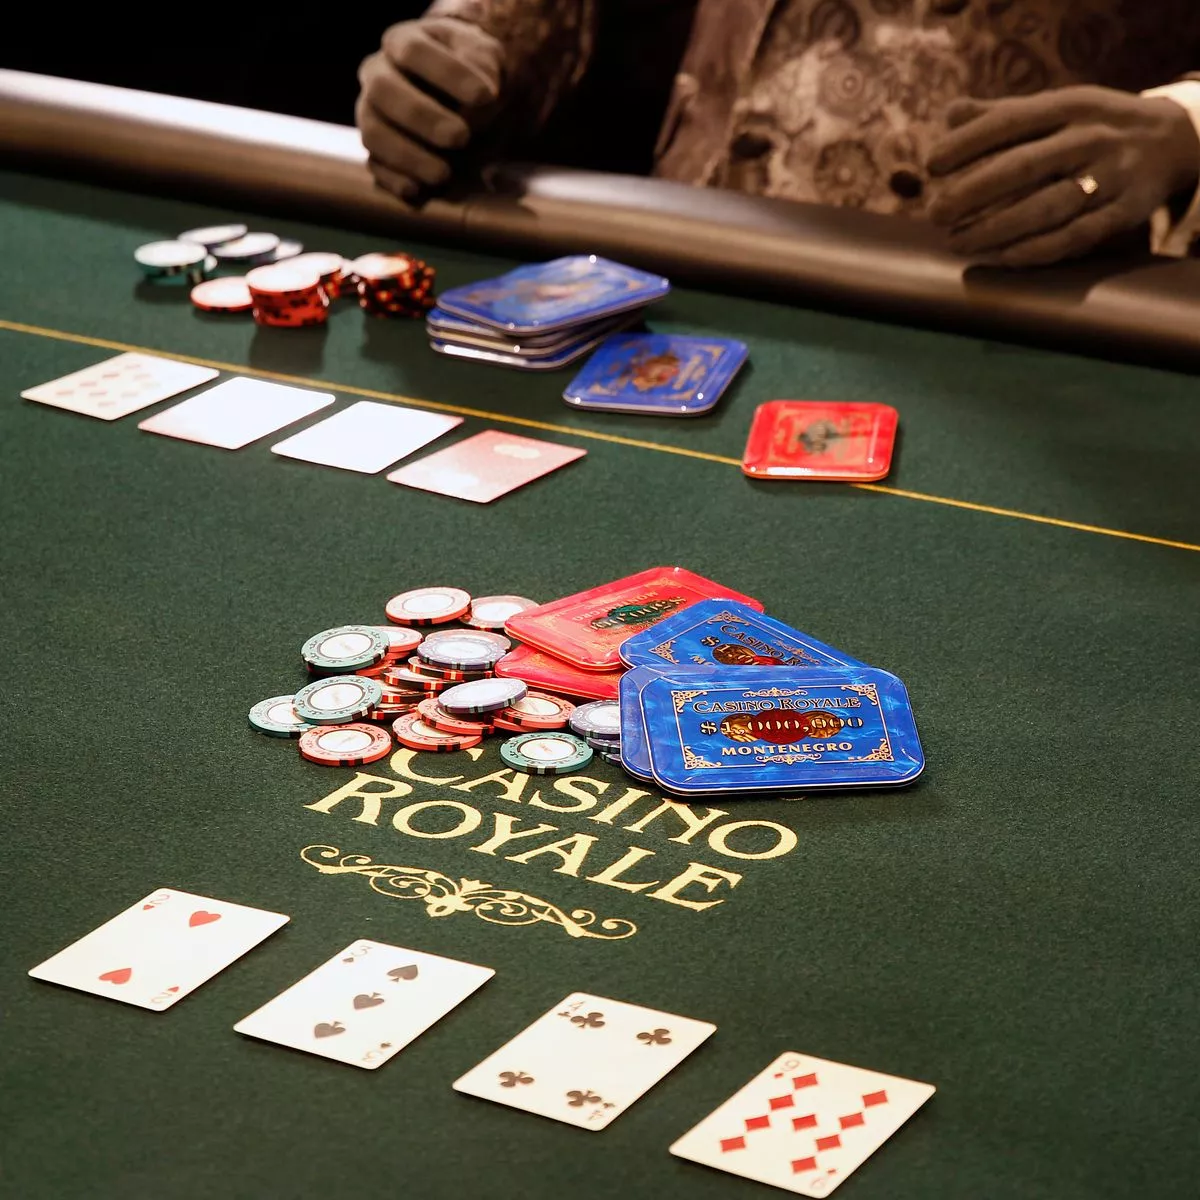 Casino War: The Sound of Shuffling Cards